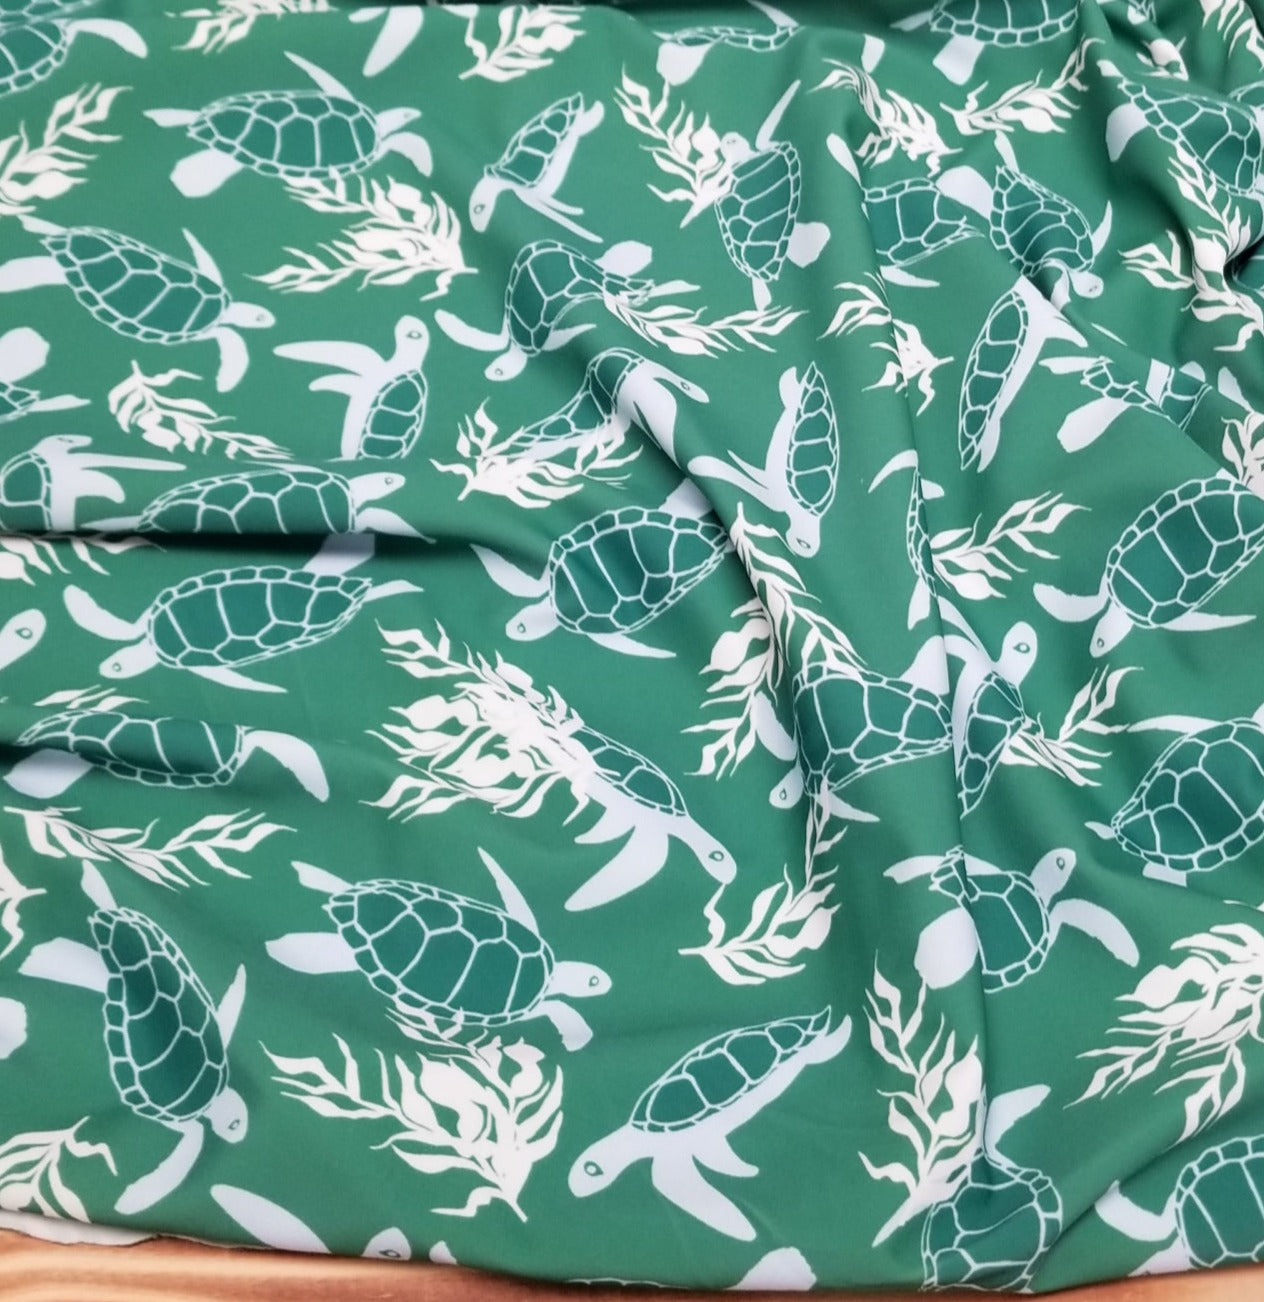 Nylon Spandex Sea Turtles in Kauai Activewear/Swimwear Knit- Sold by the yard